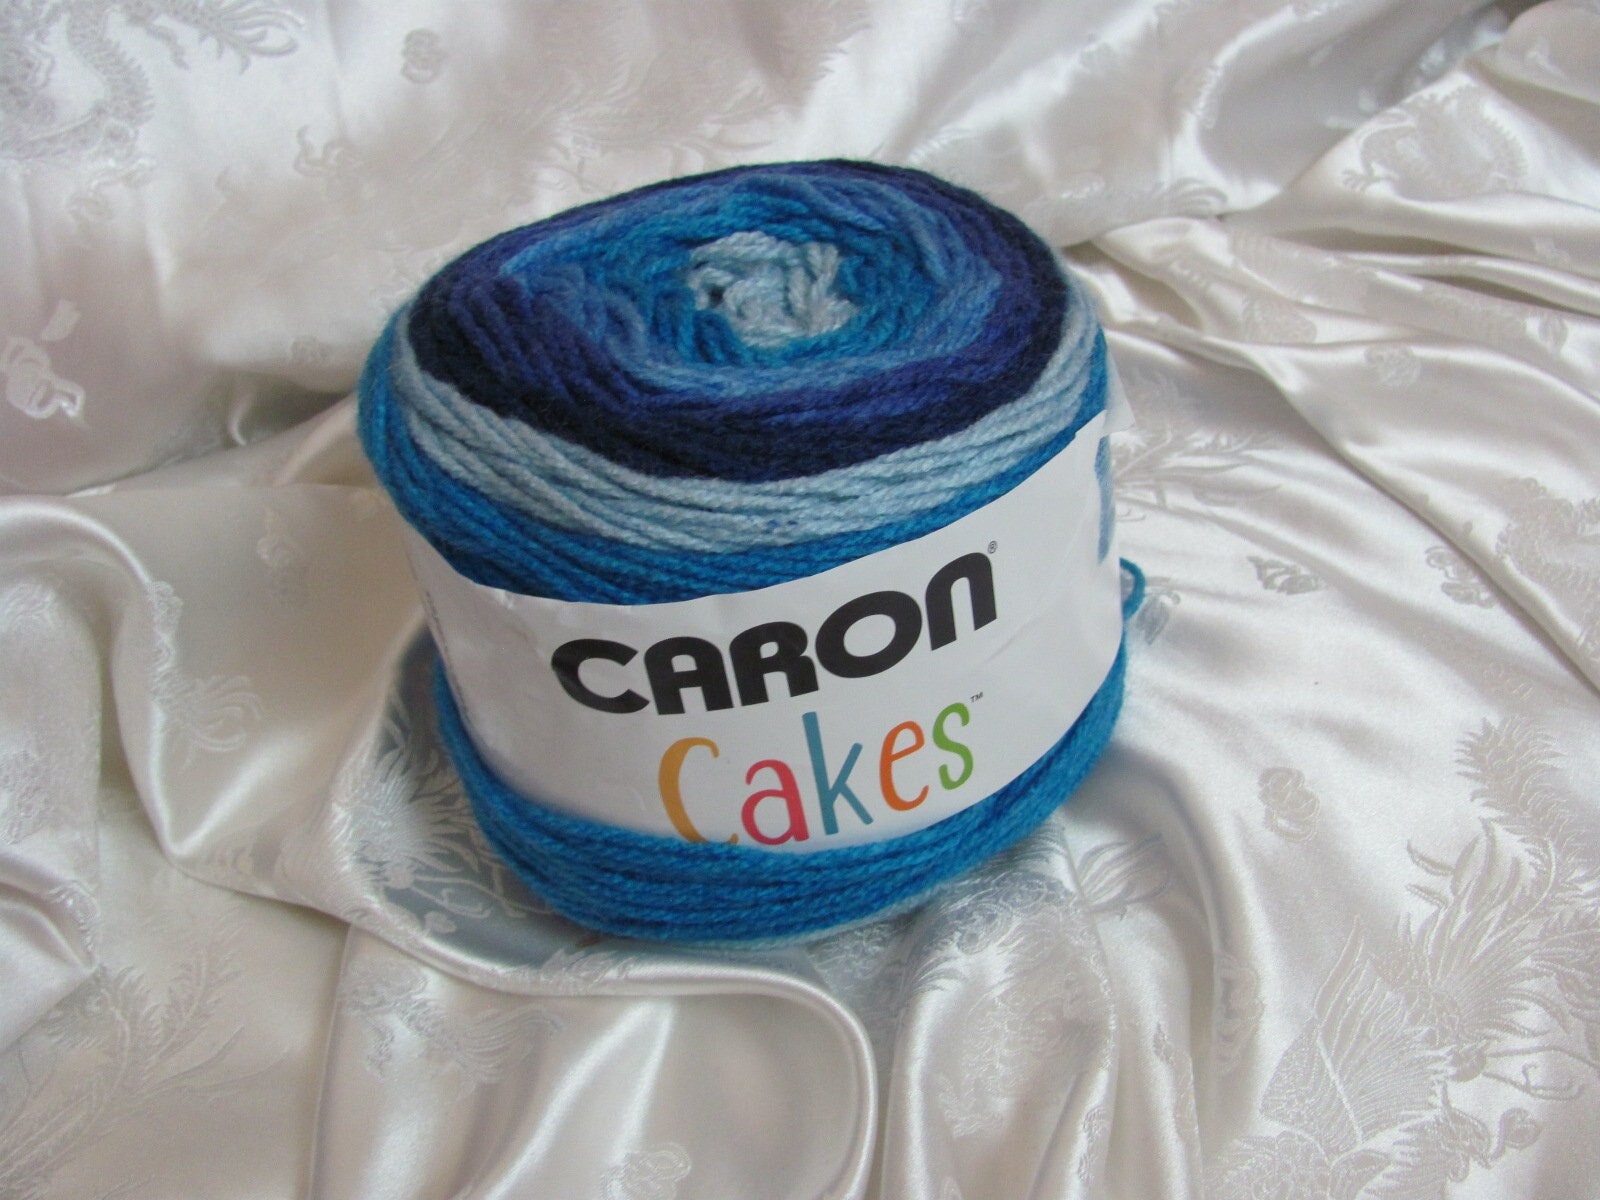 Caron yarn skein from 7oz to 6oz : r/shrinkflation